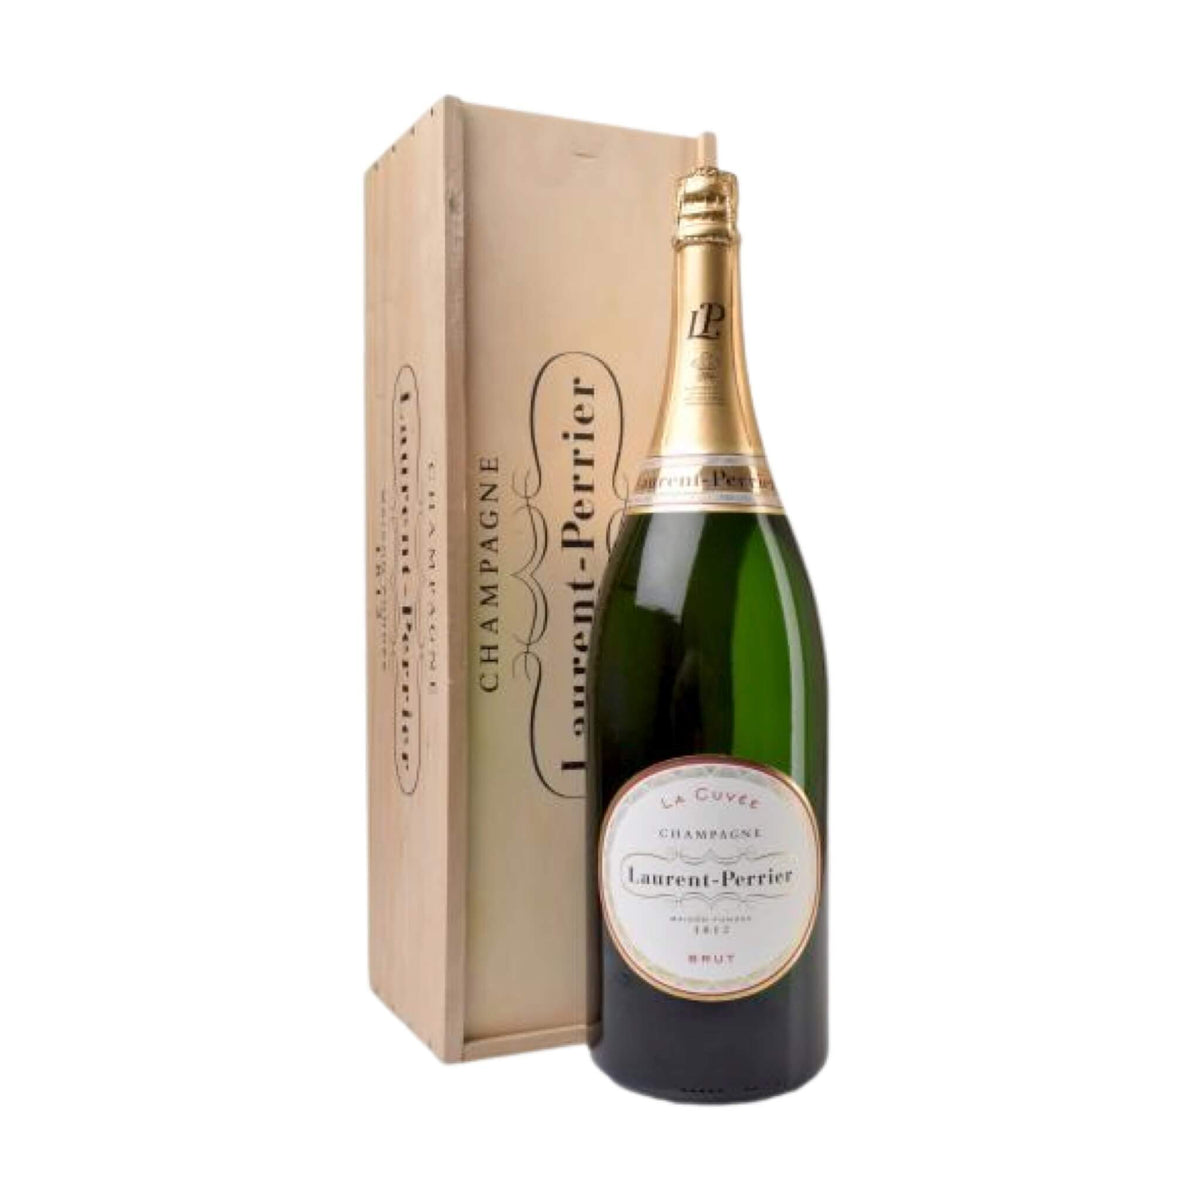 Champagne Laurent-Perrier - Brut AOC WINECOM Magnum Champagne (3,0l) DMG 